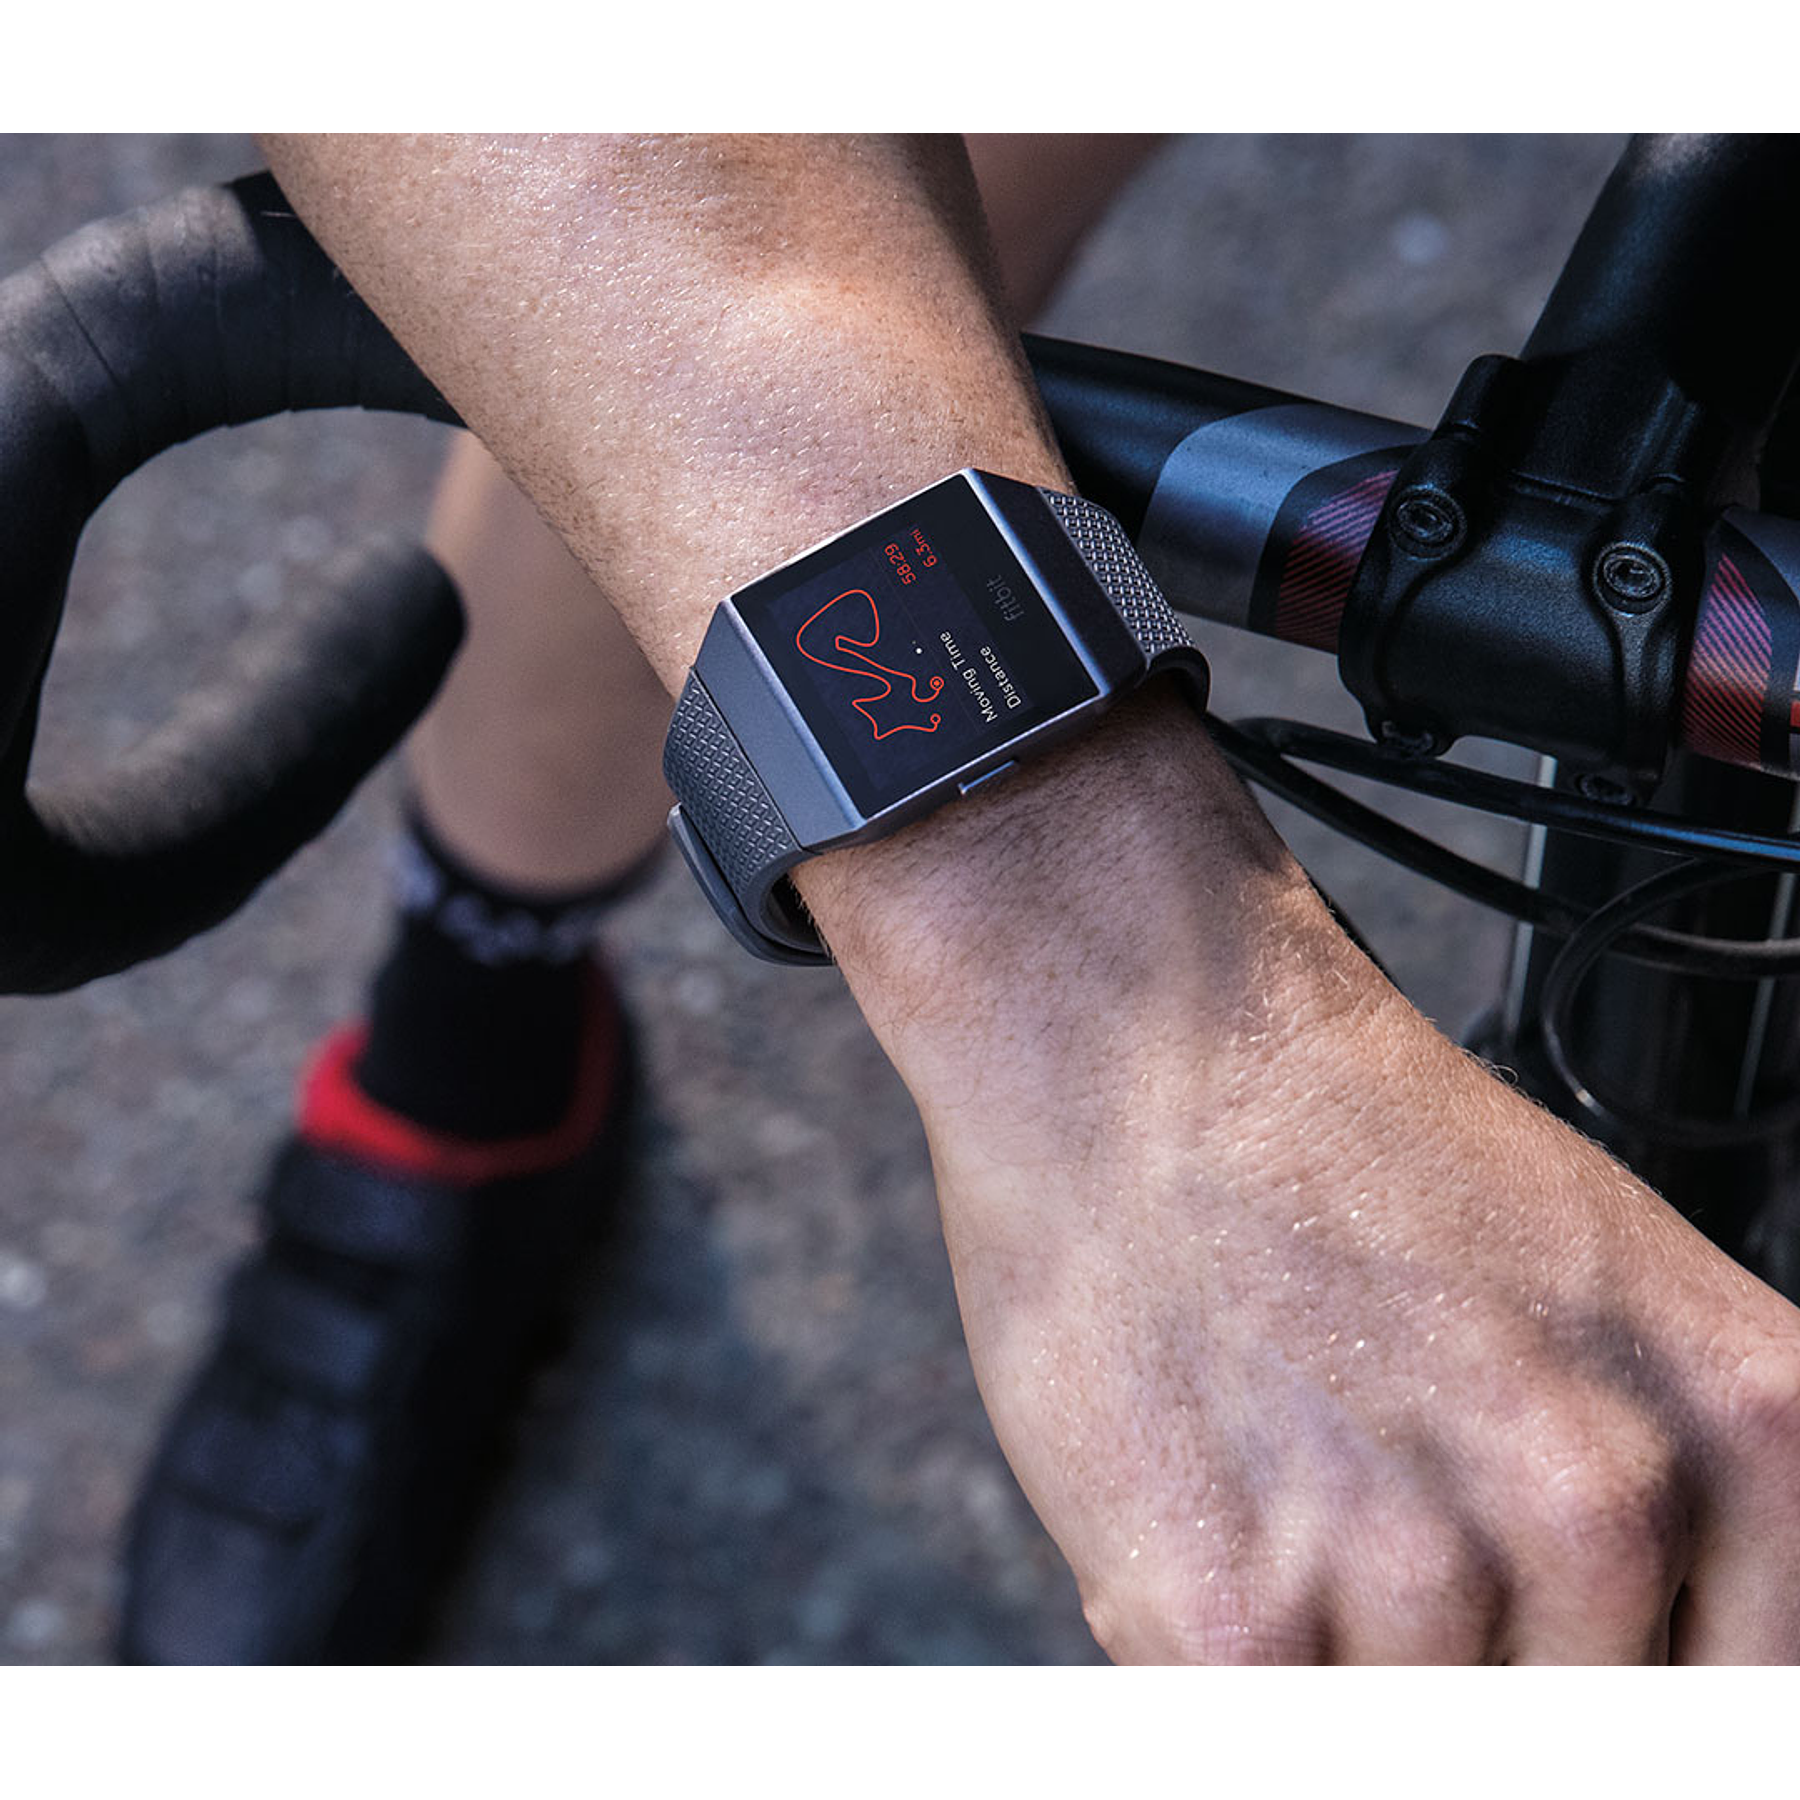 Fibit Ionic Smartwatch Black